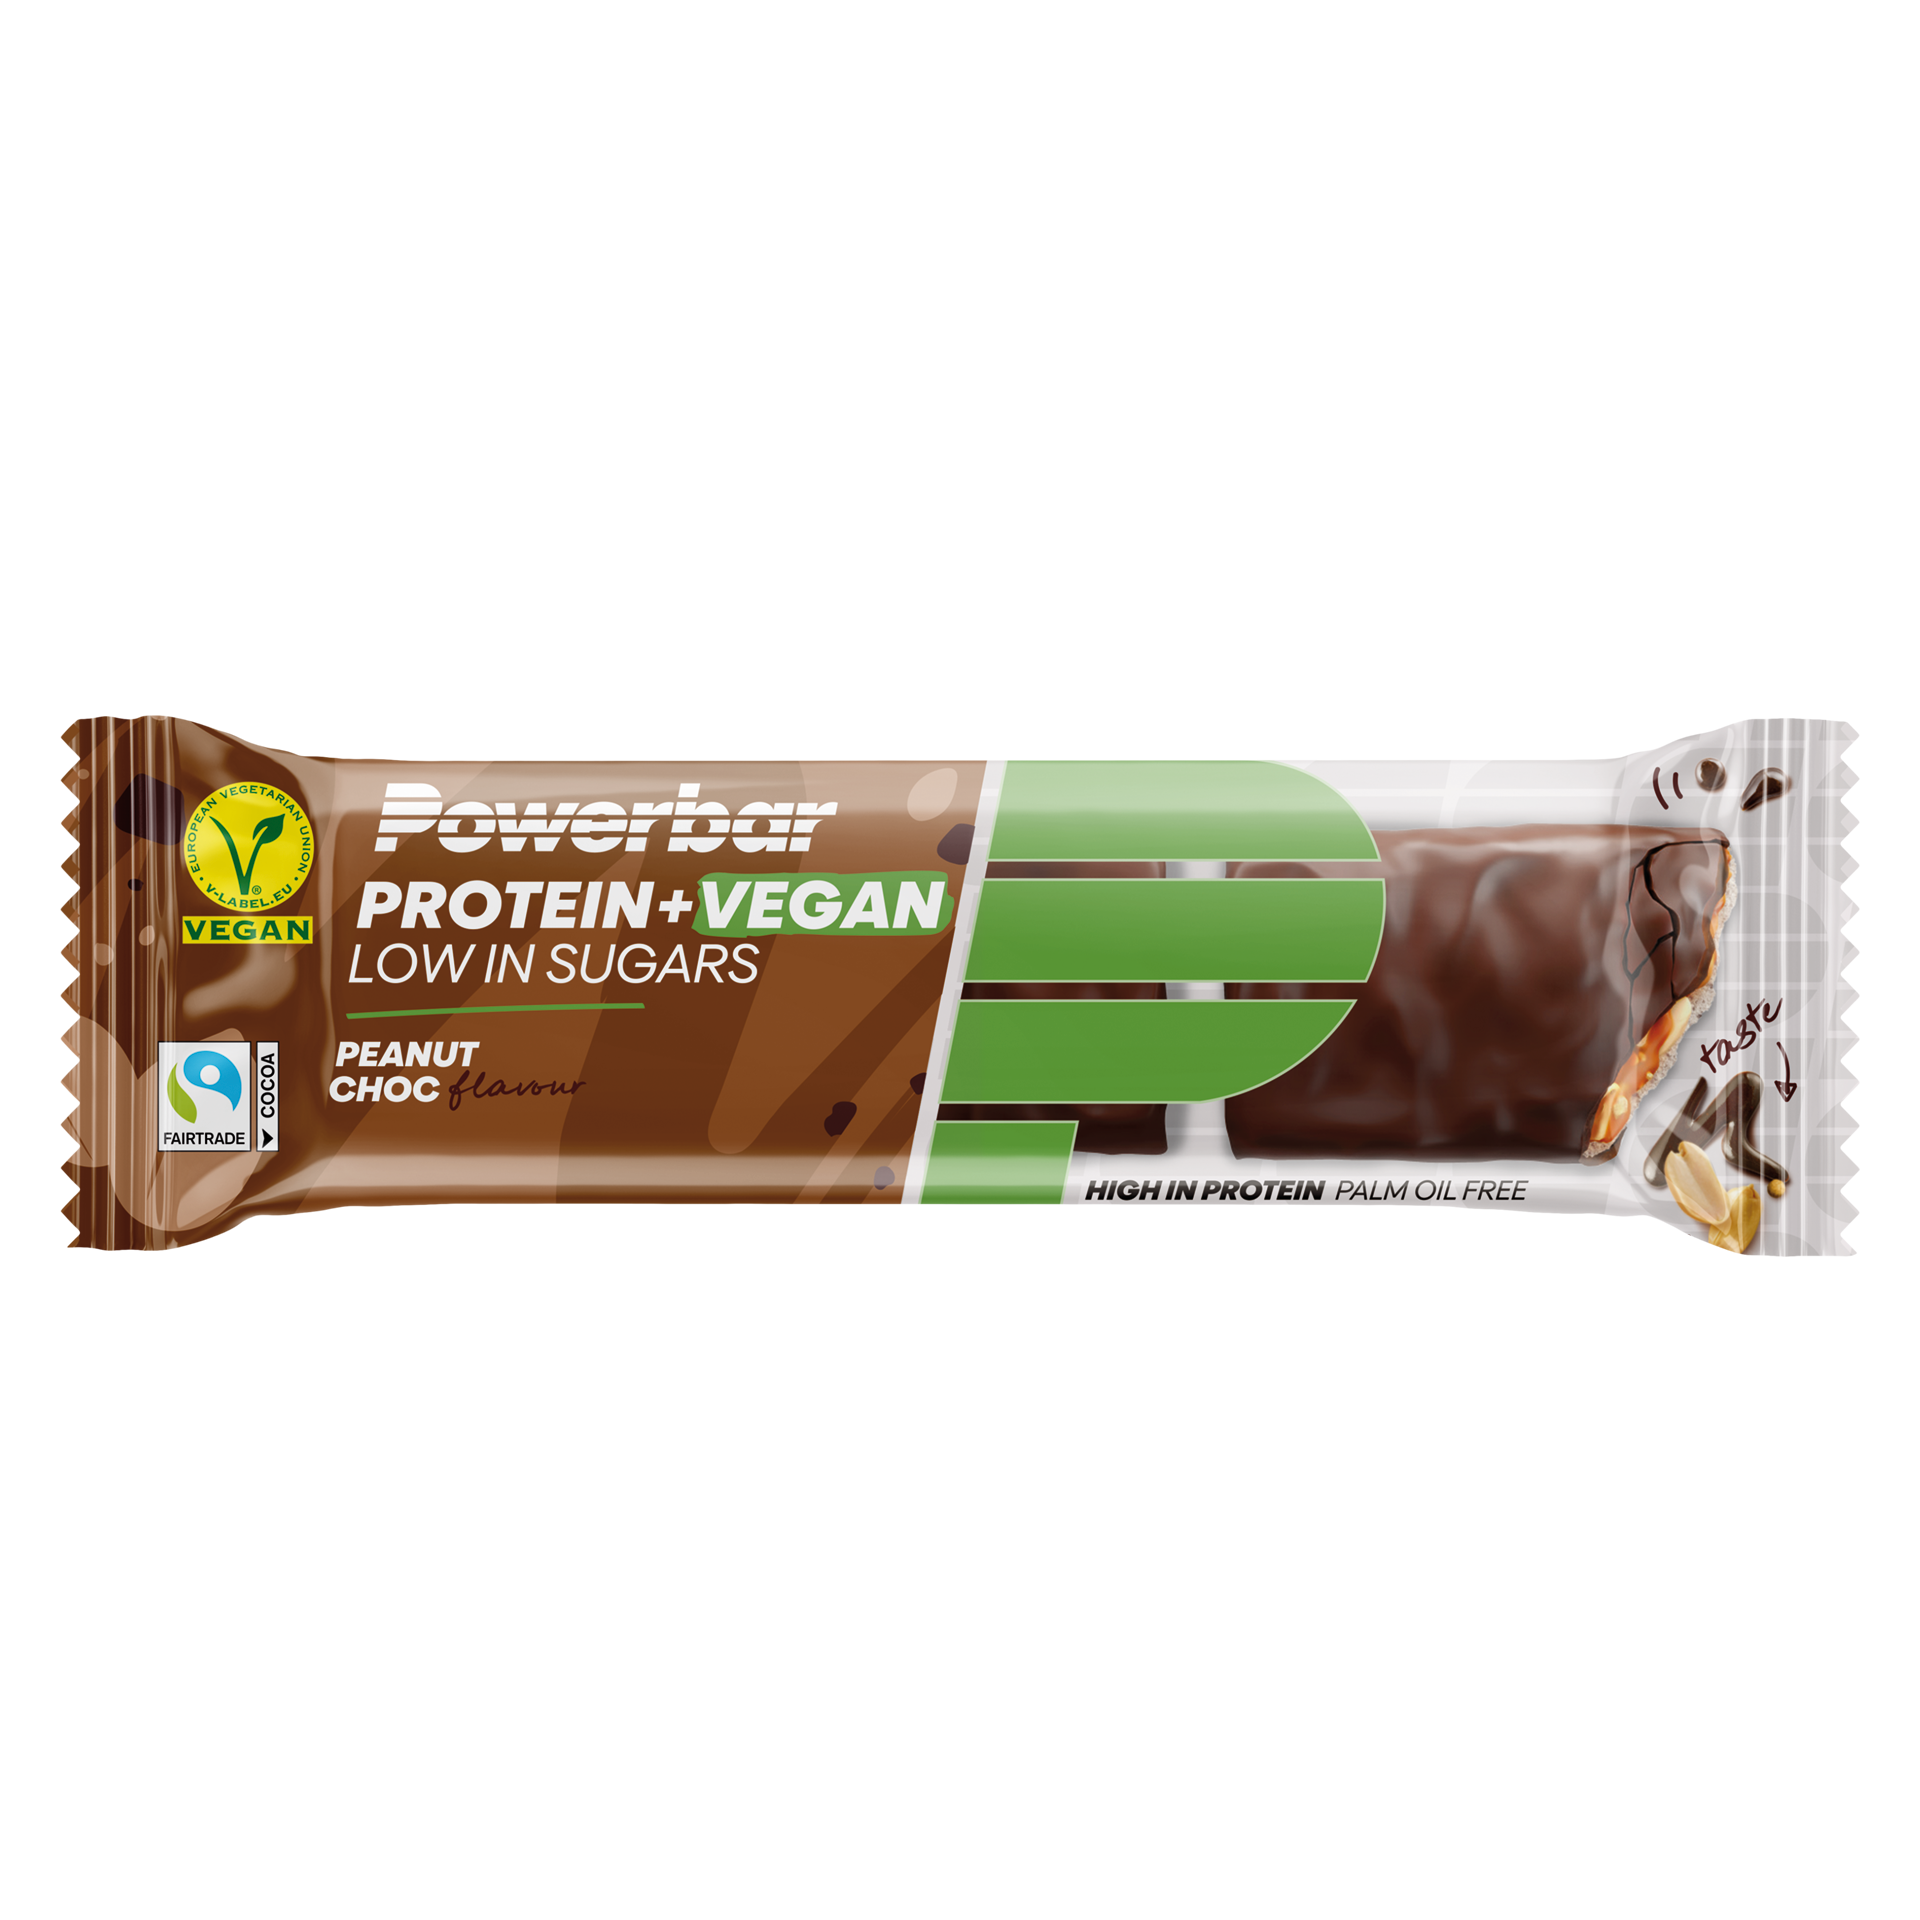 Protein+ Vegan